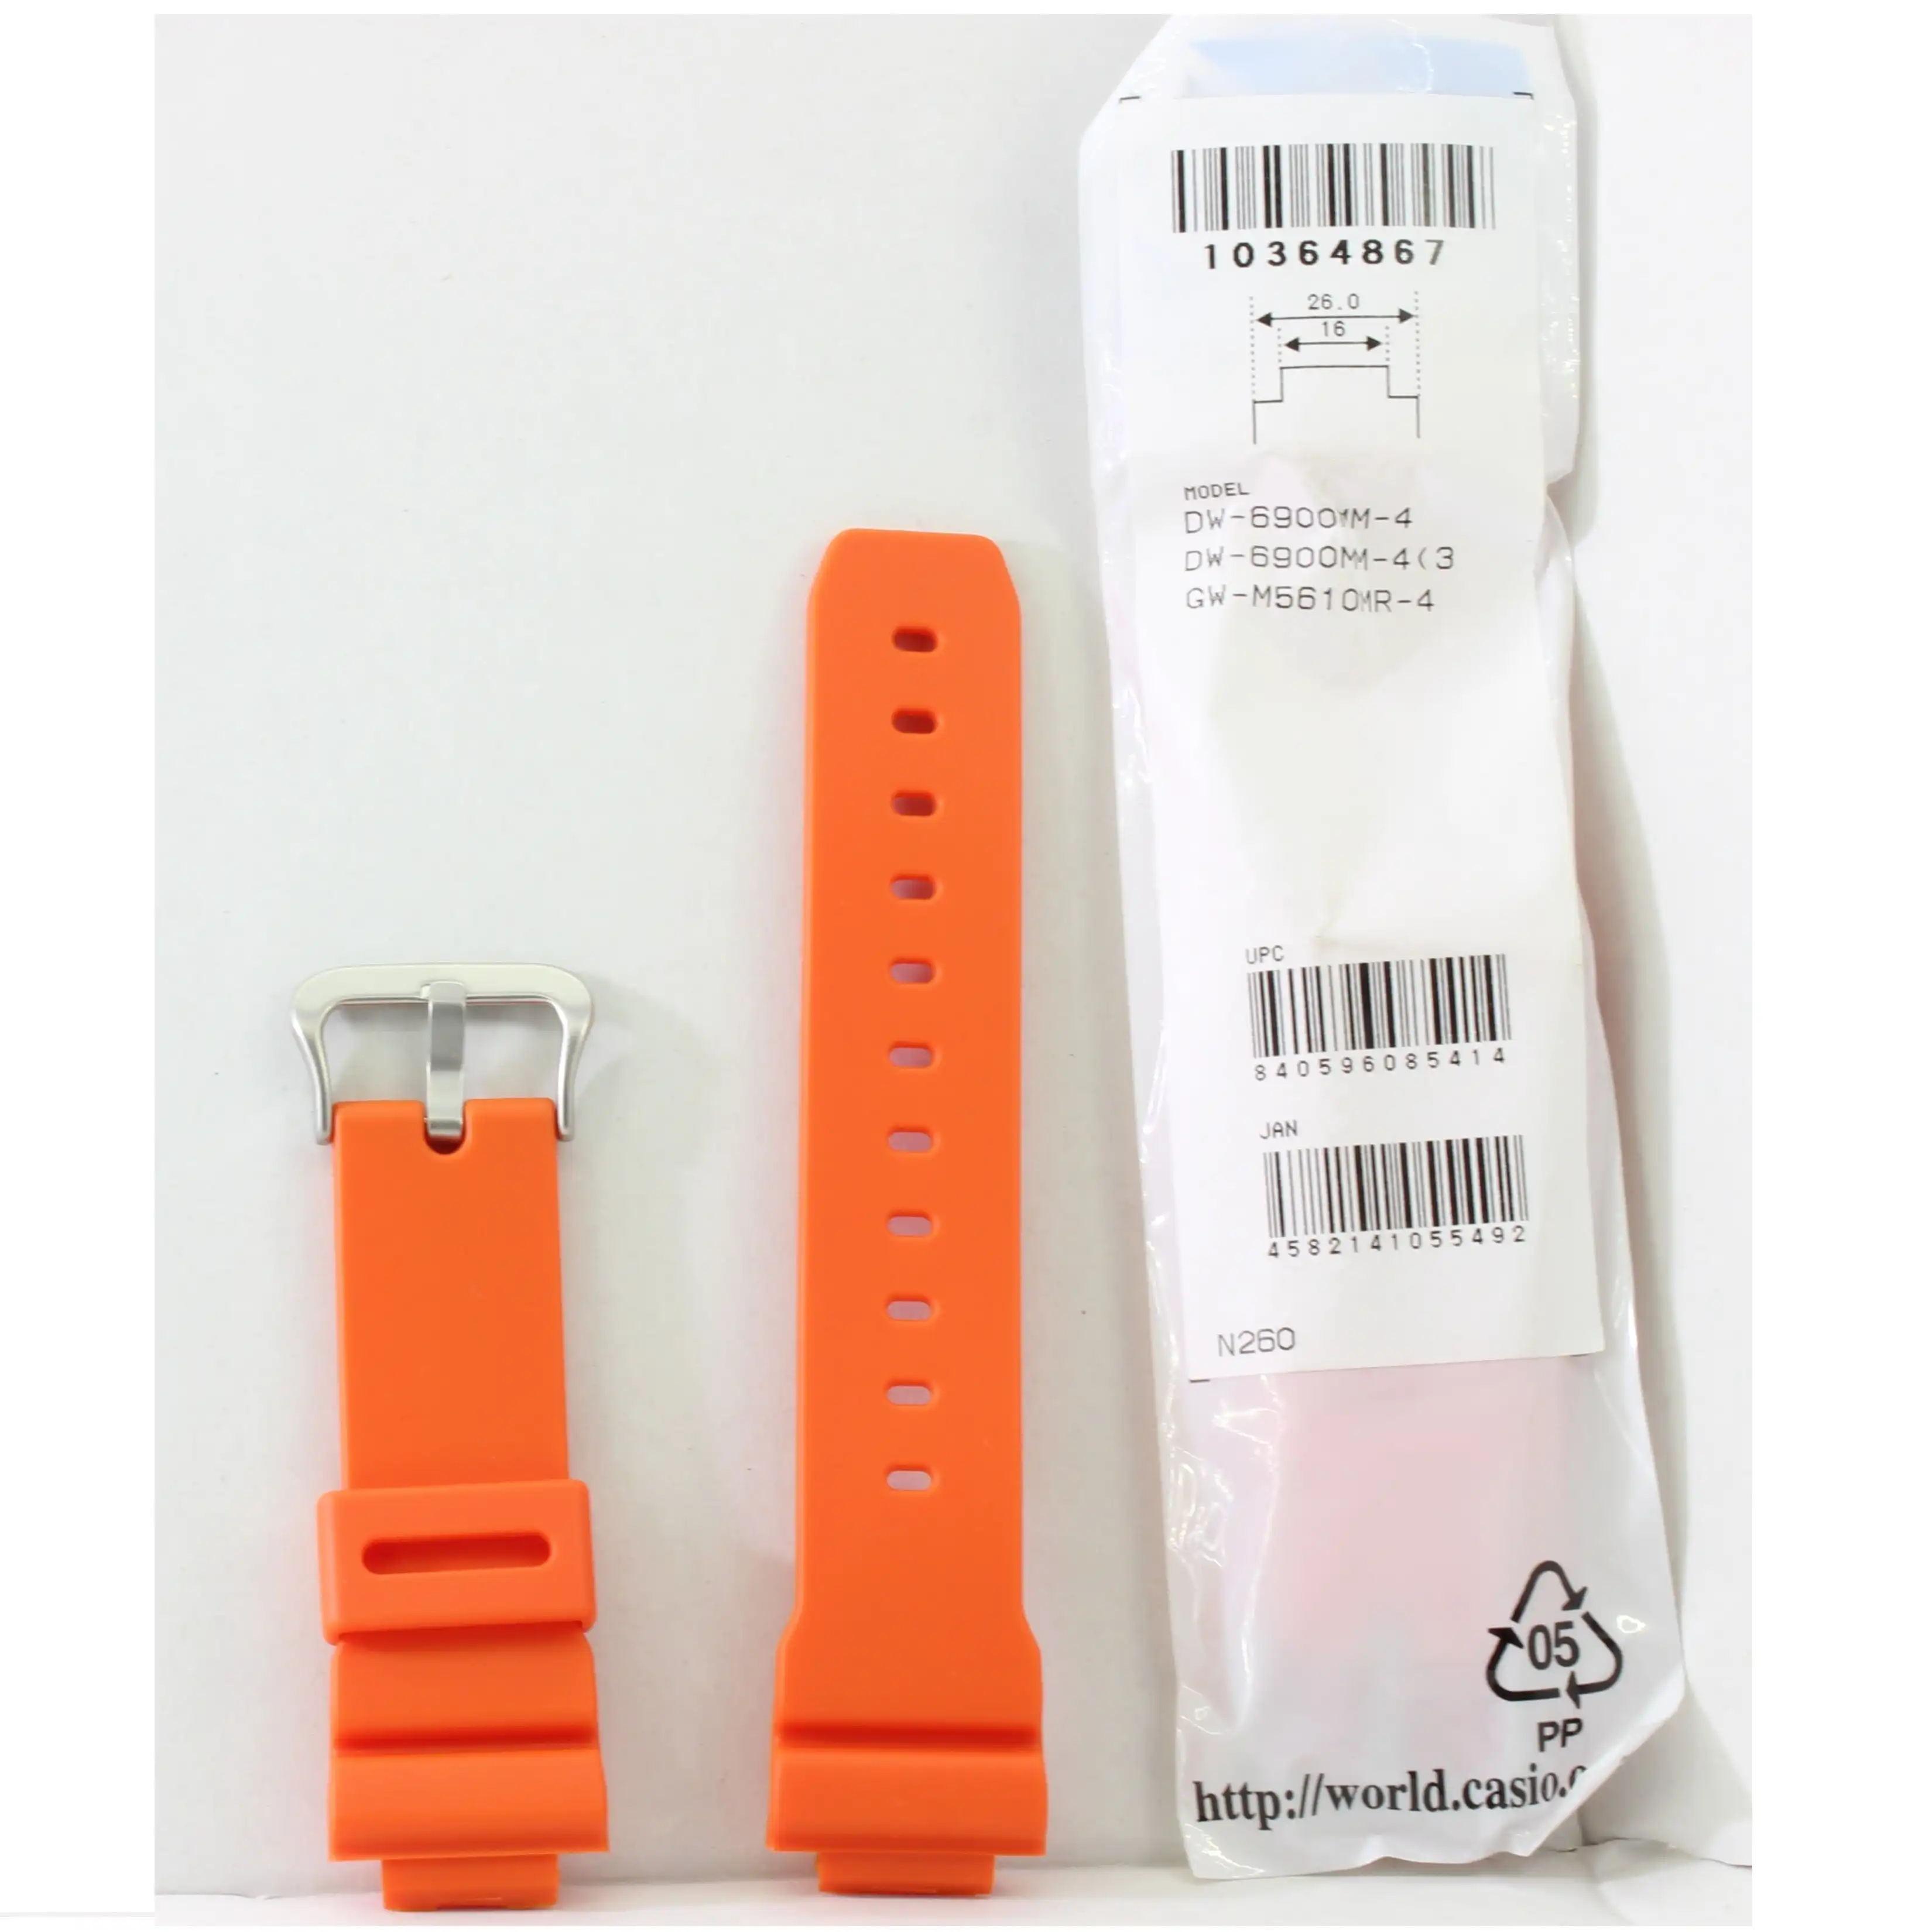 Casio G-Shock Matte Orange Genuine Replacement Strap 10364867 to suit DW-6900MM-4